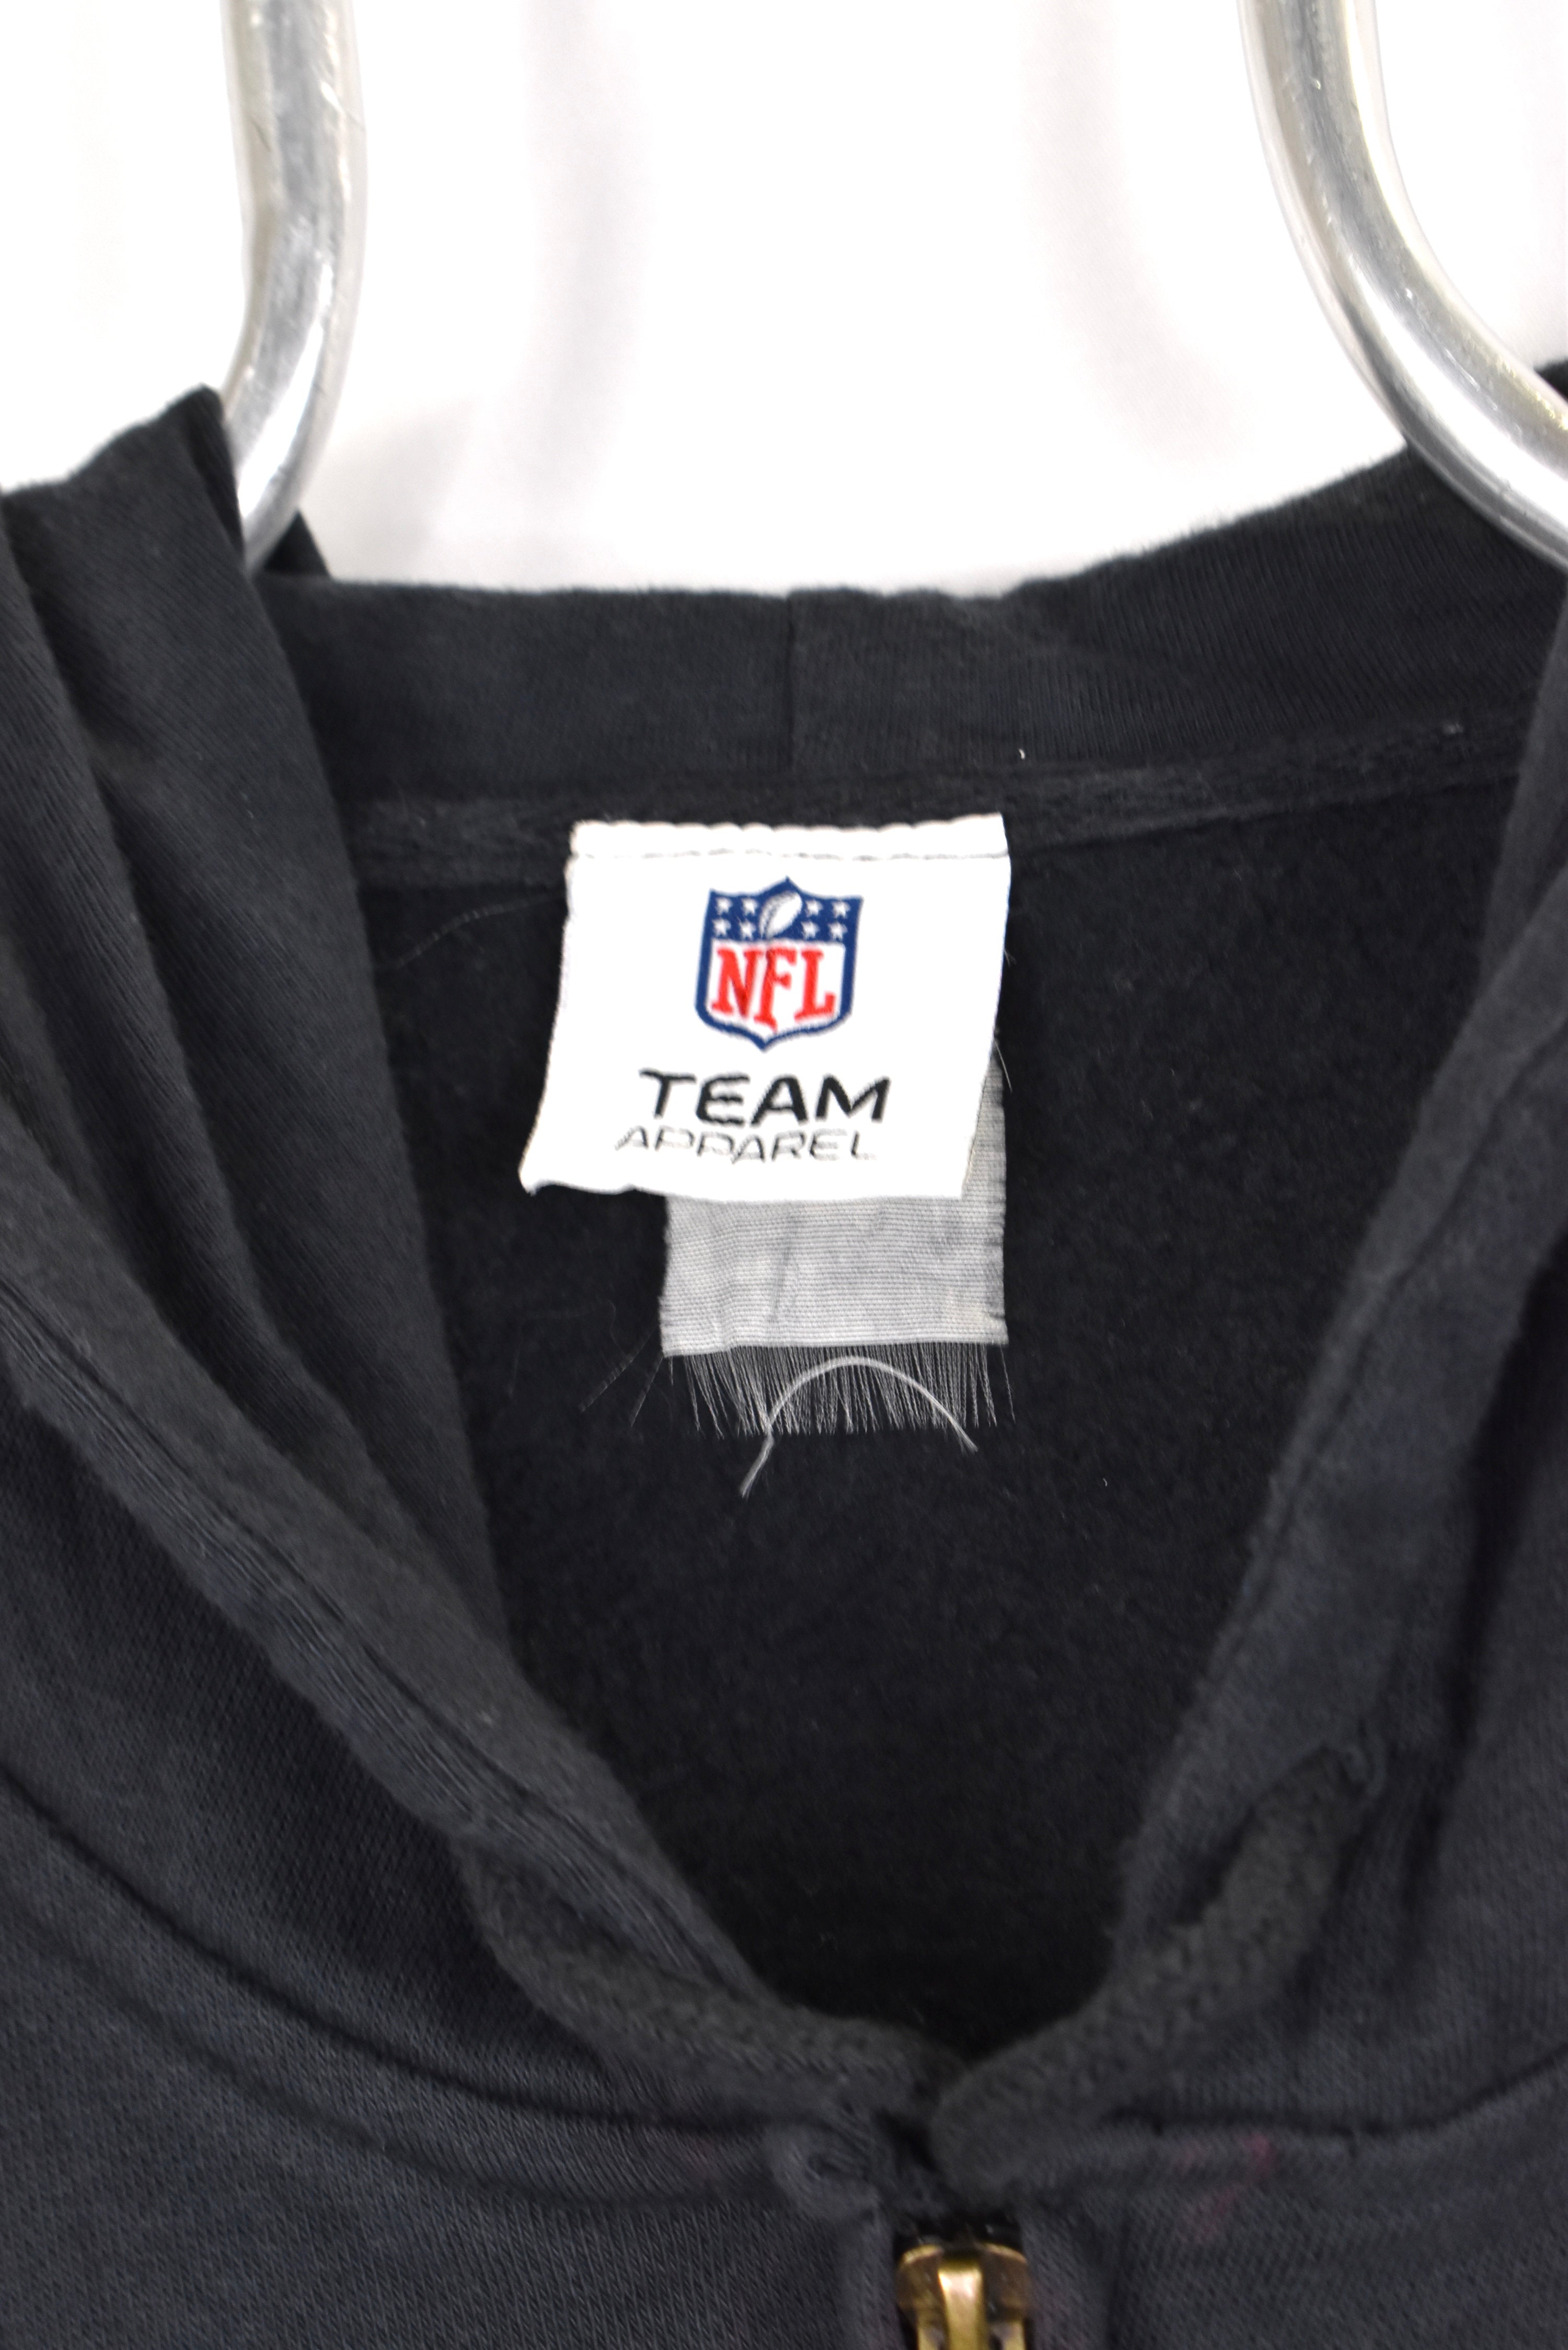 Vintage Carolina Panthers hoodie, NFL black graphic sweatshirt - AU Large PRO SPORT